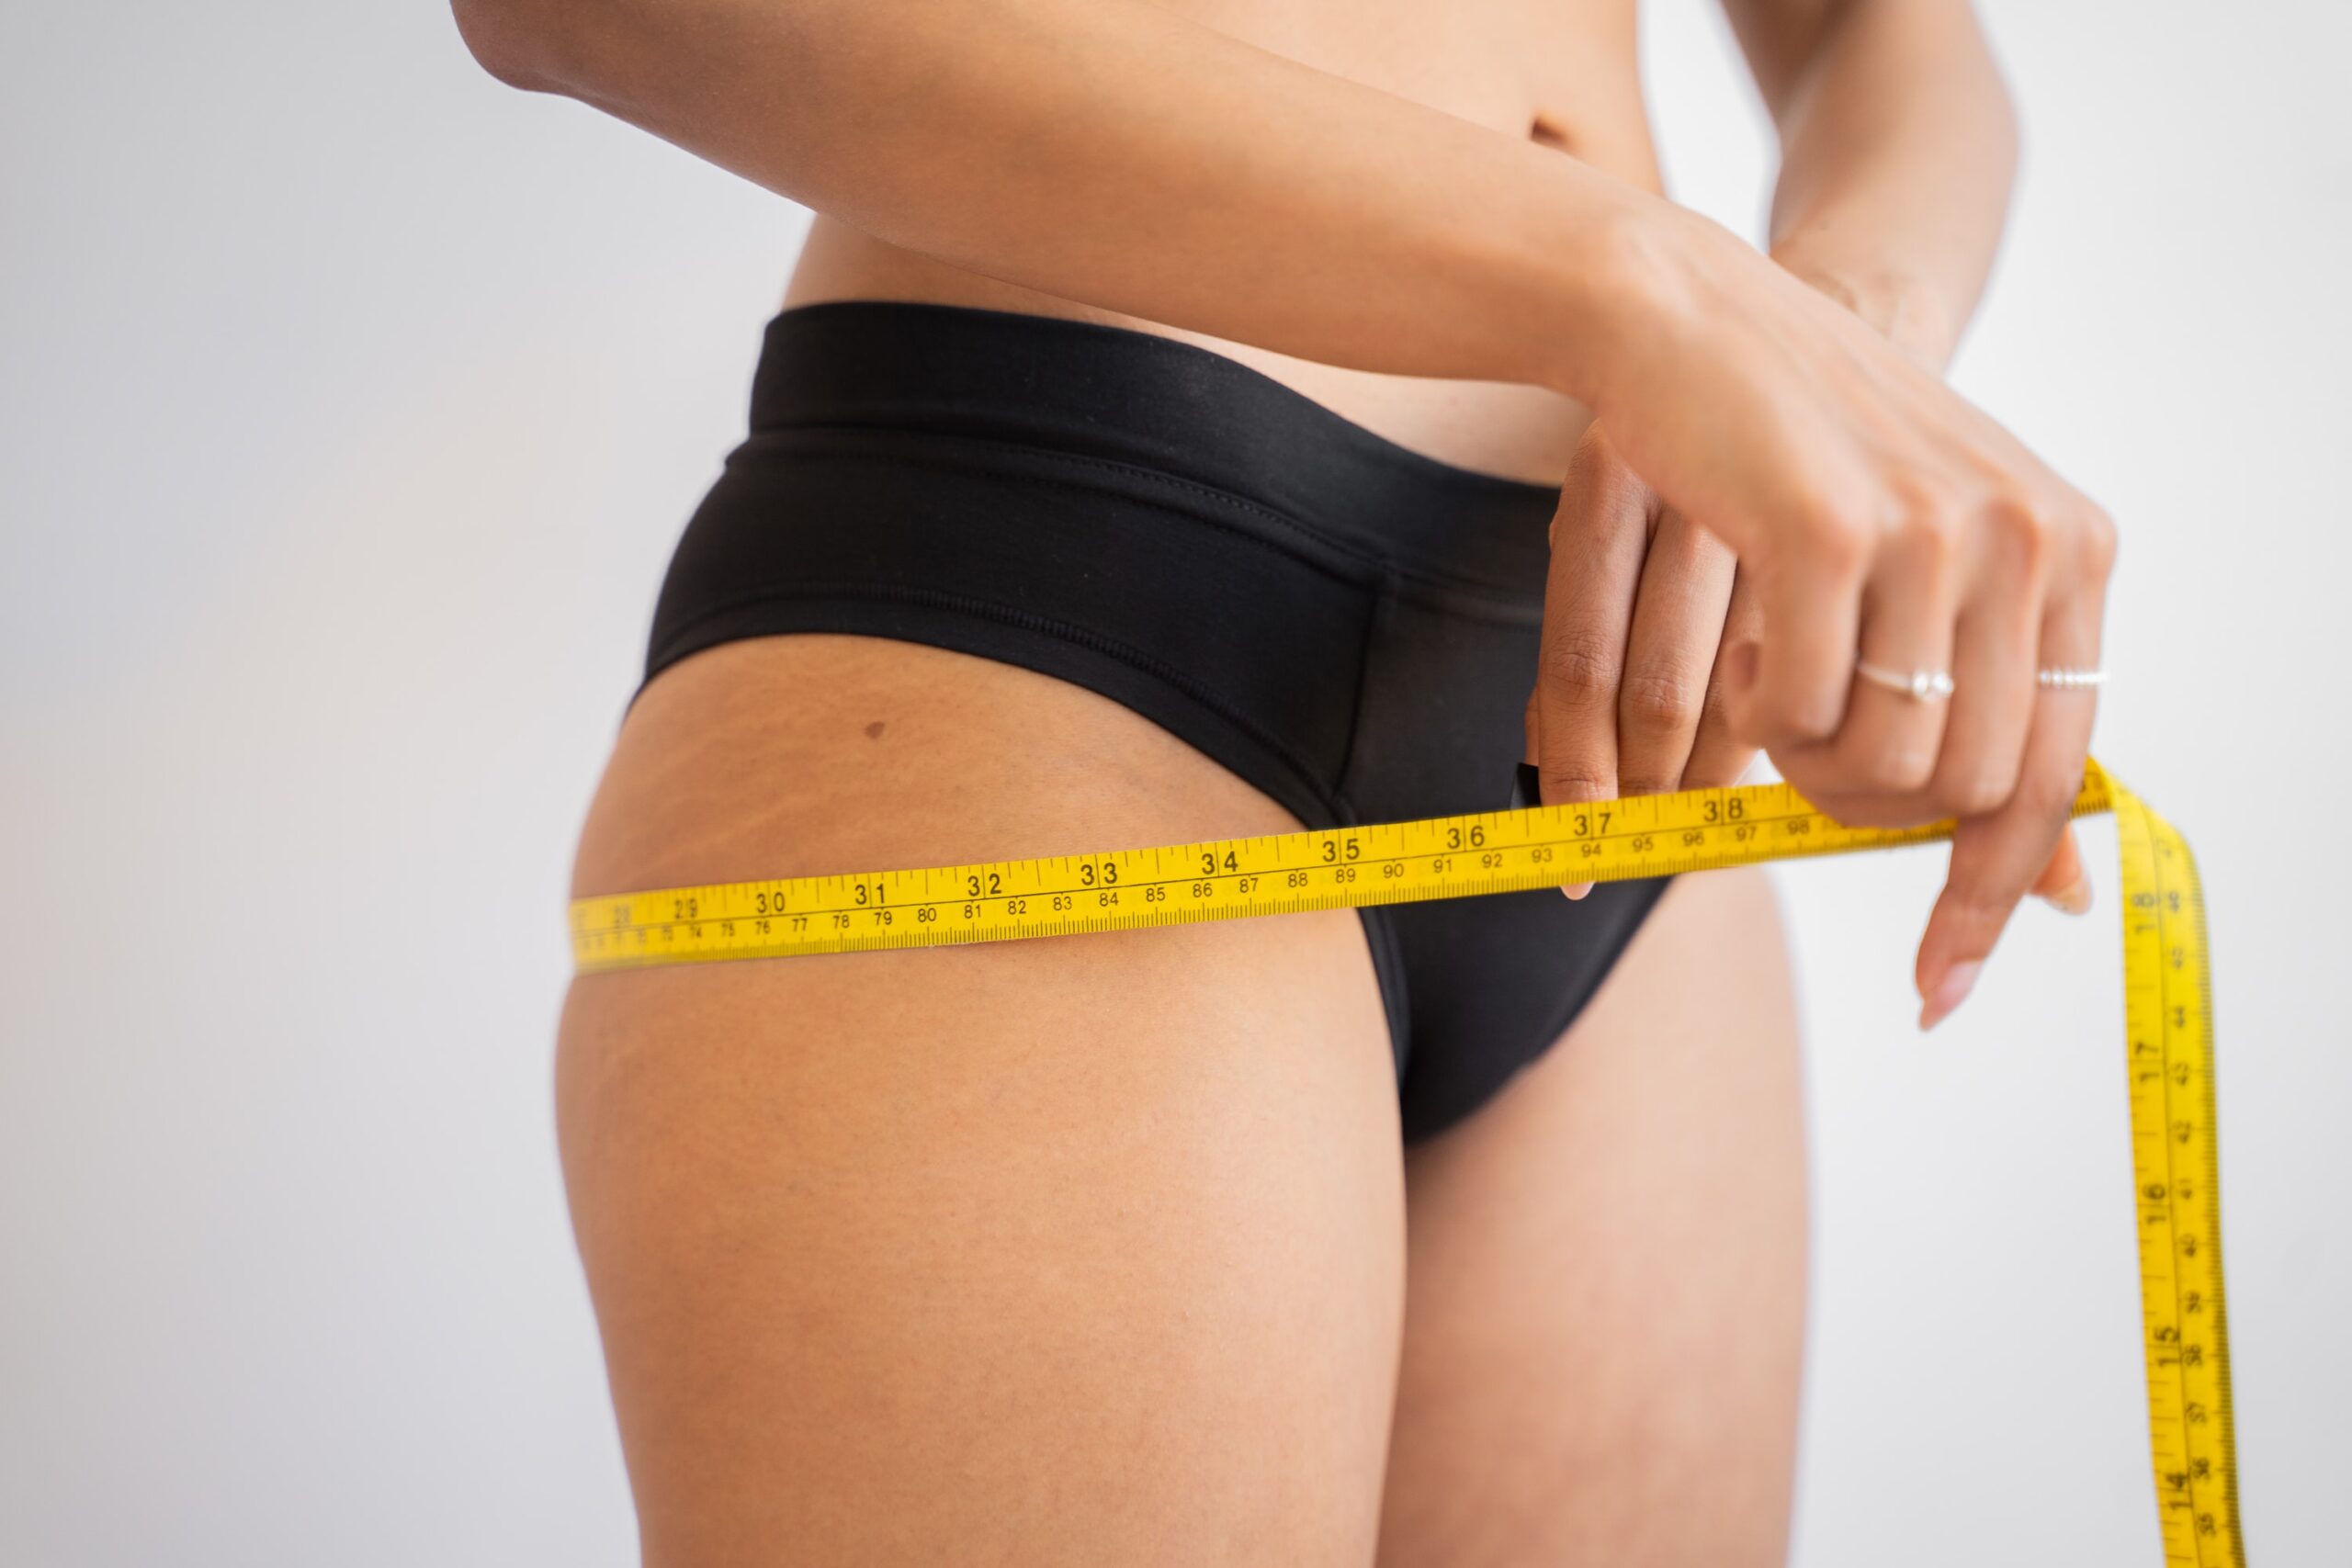 https://www.shortform.com/blog/wp-content/uploads/2020/12/body-measurement-fat-hips-waist-health-scaled.jpg